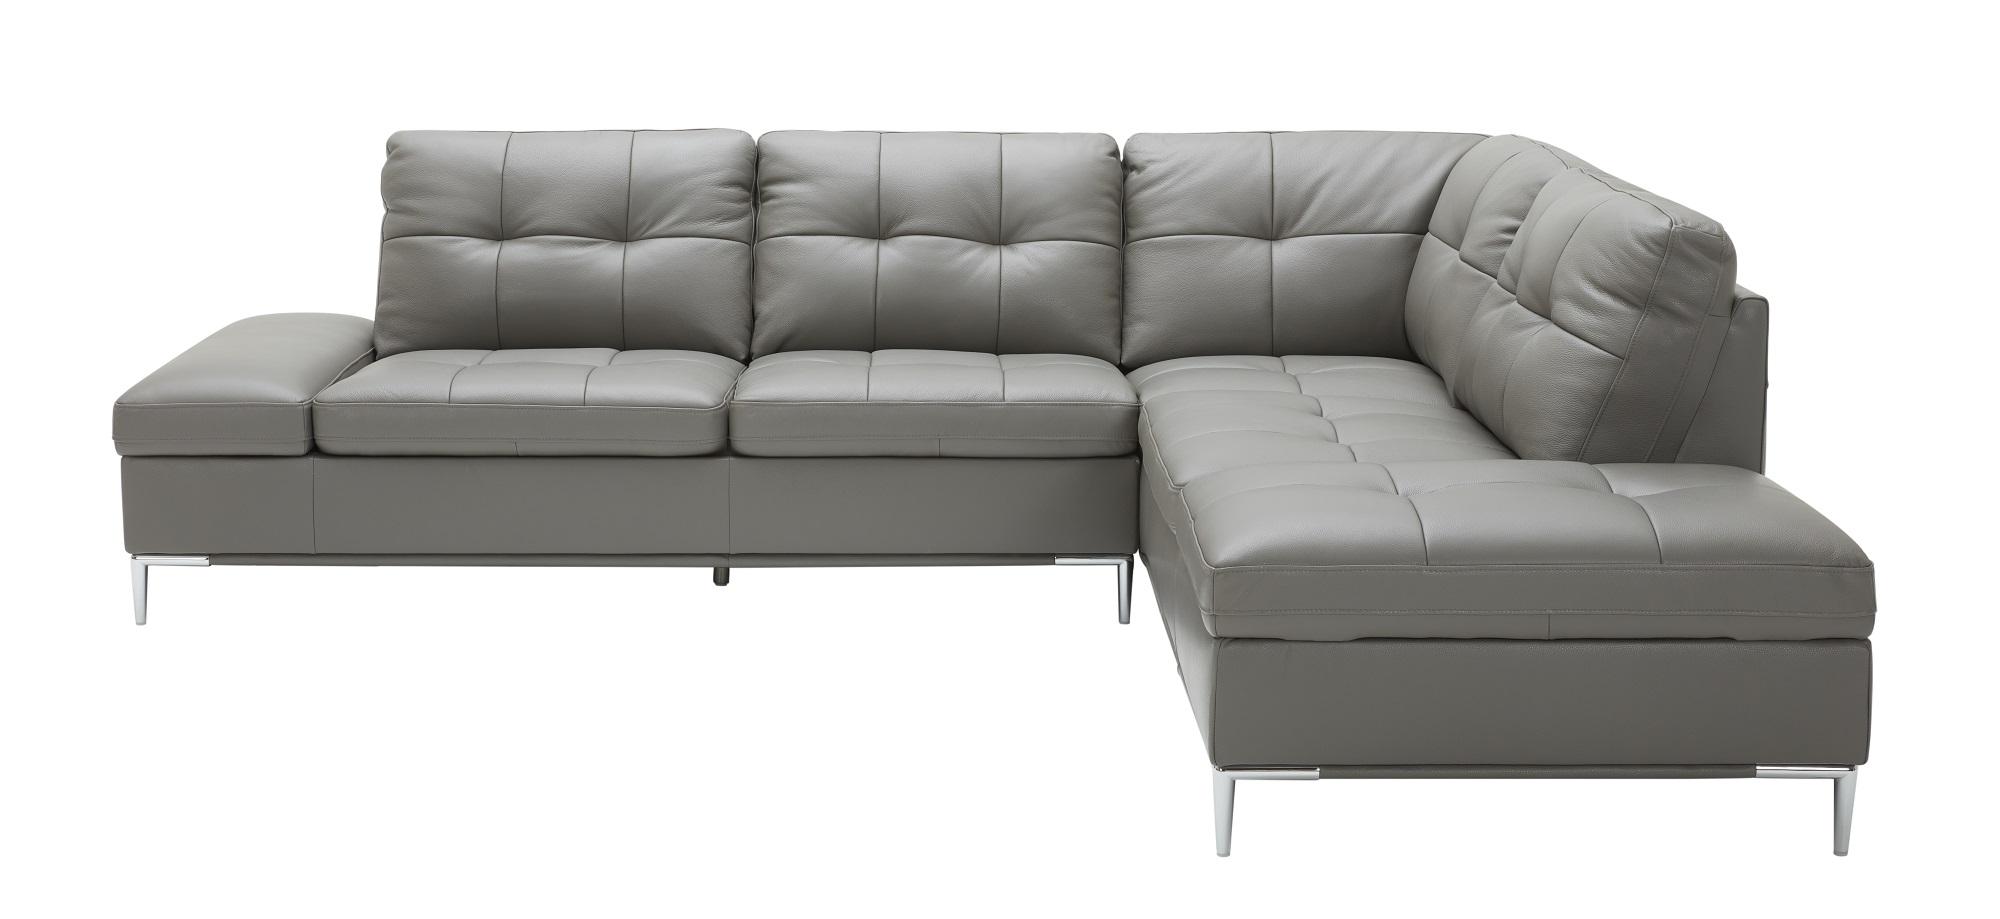 Contemporary Sectional Sofa Leonardo SKU 18996 in Gray Leather